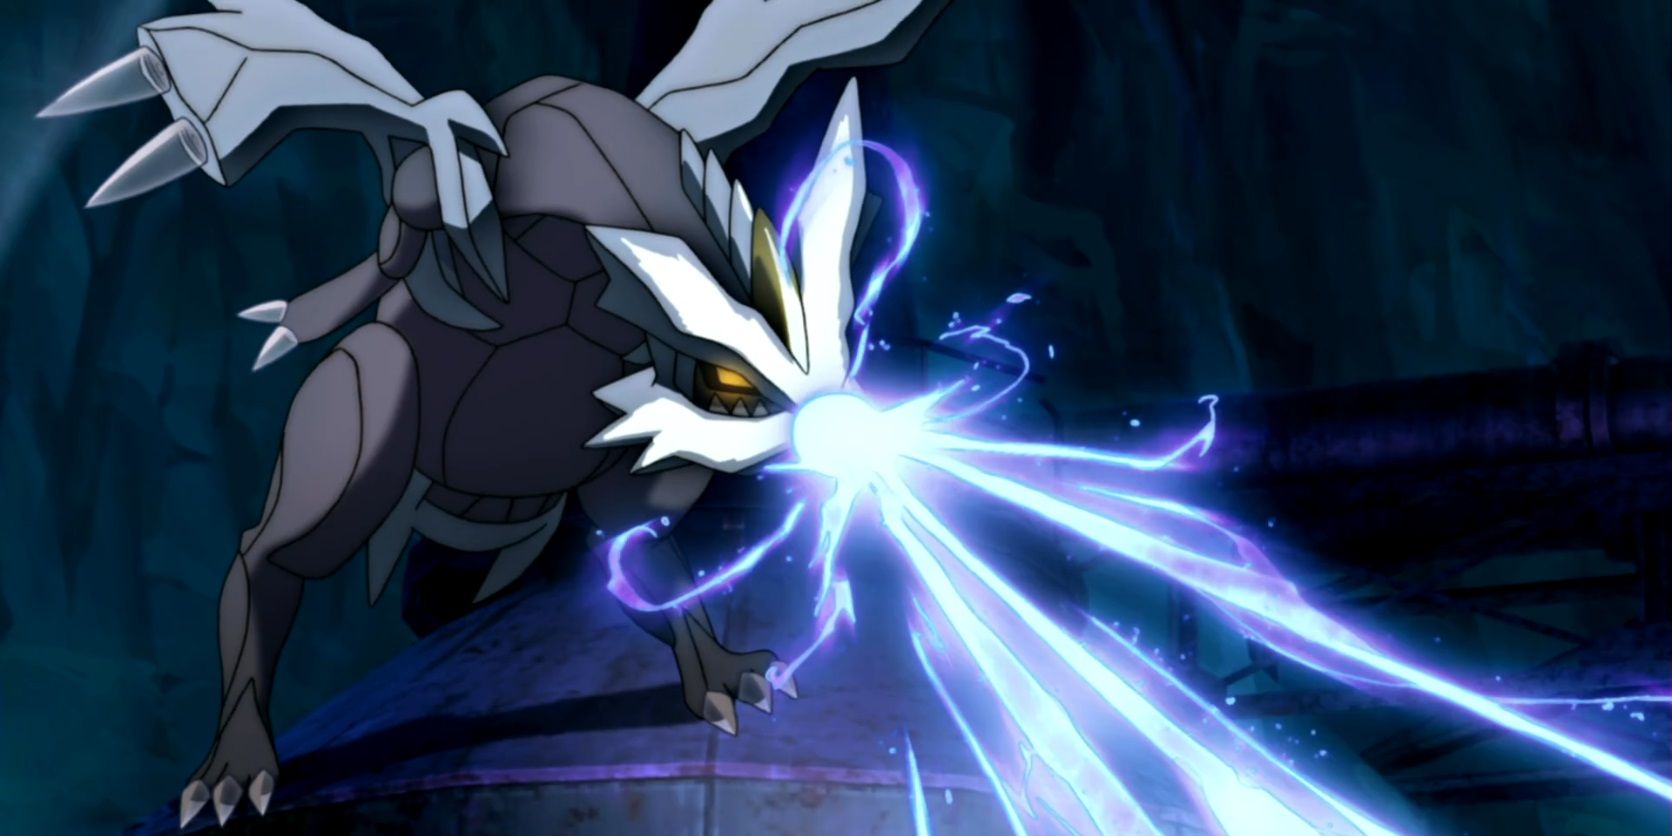 Kyurem using Ice Beam in the Pokemon anime